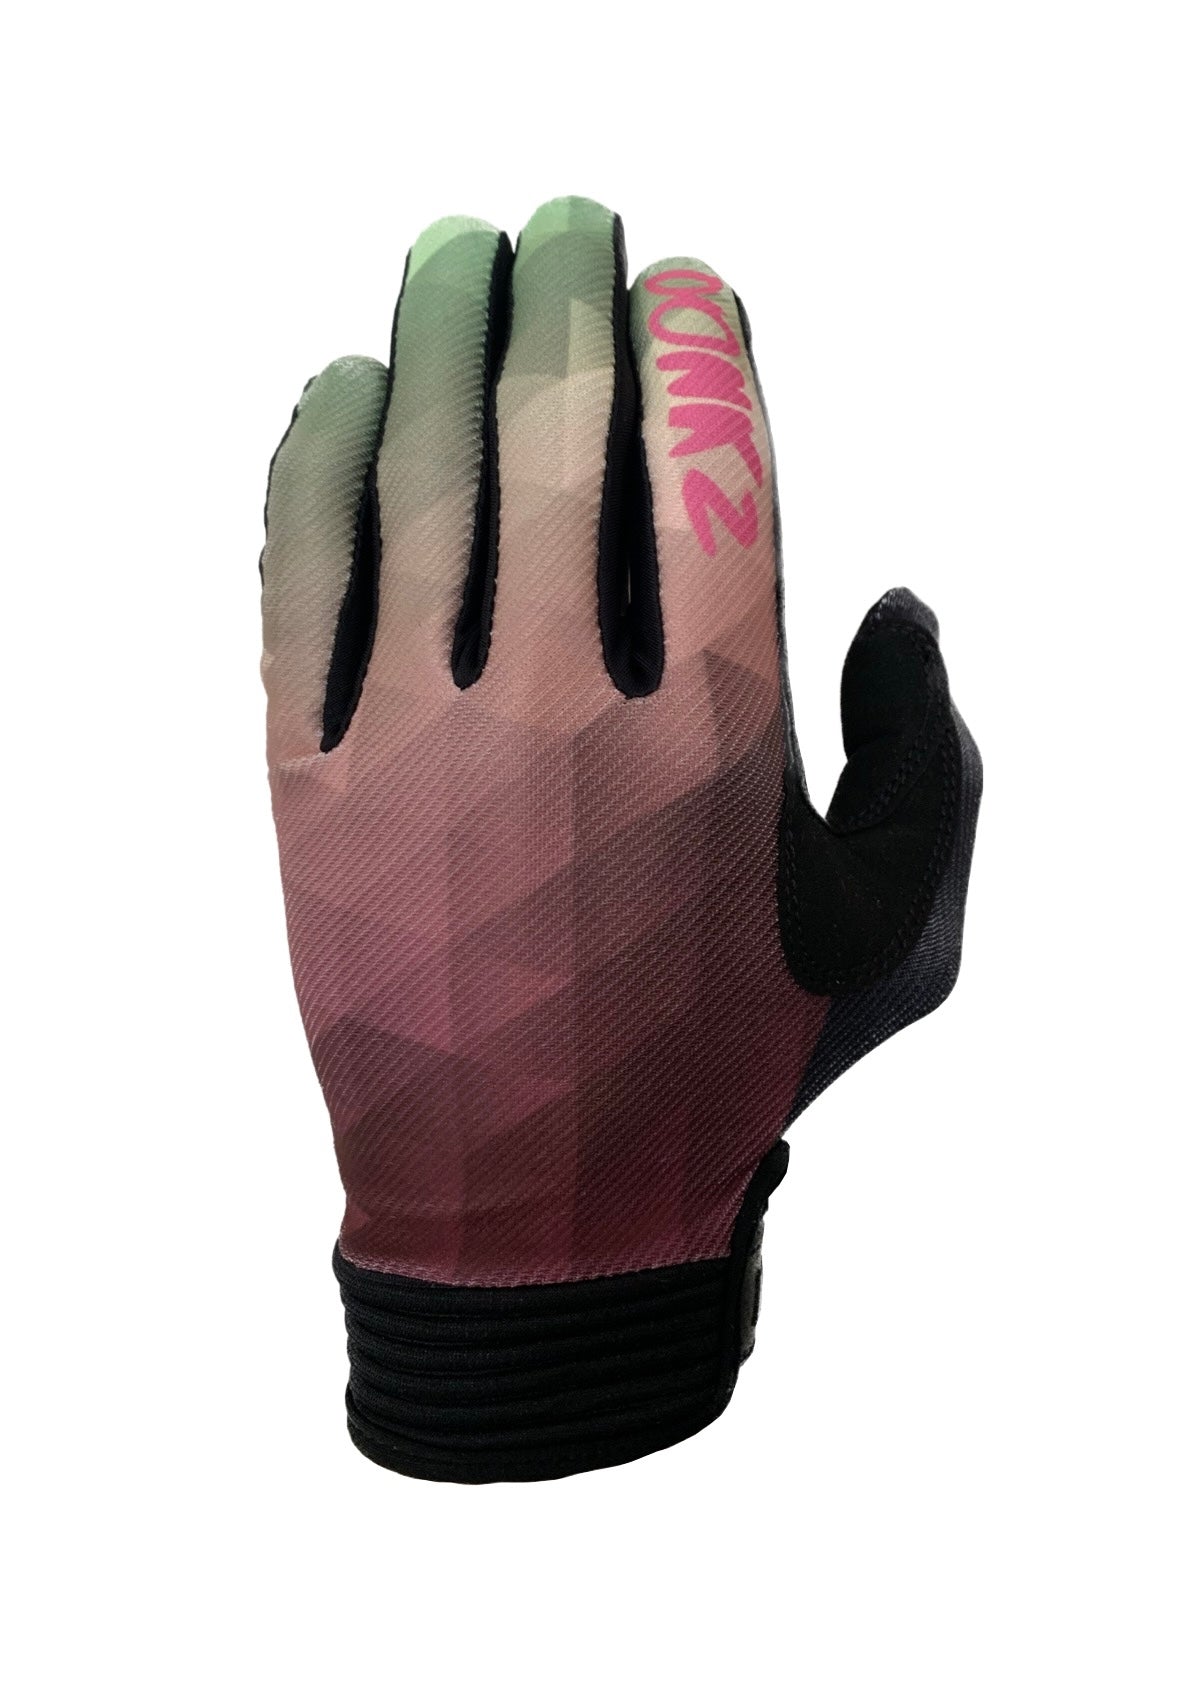 Kids Big Whips Gloves Pink/Green